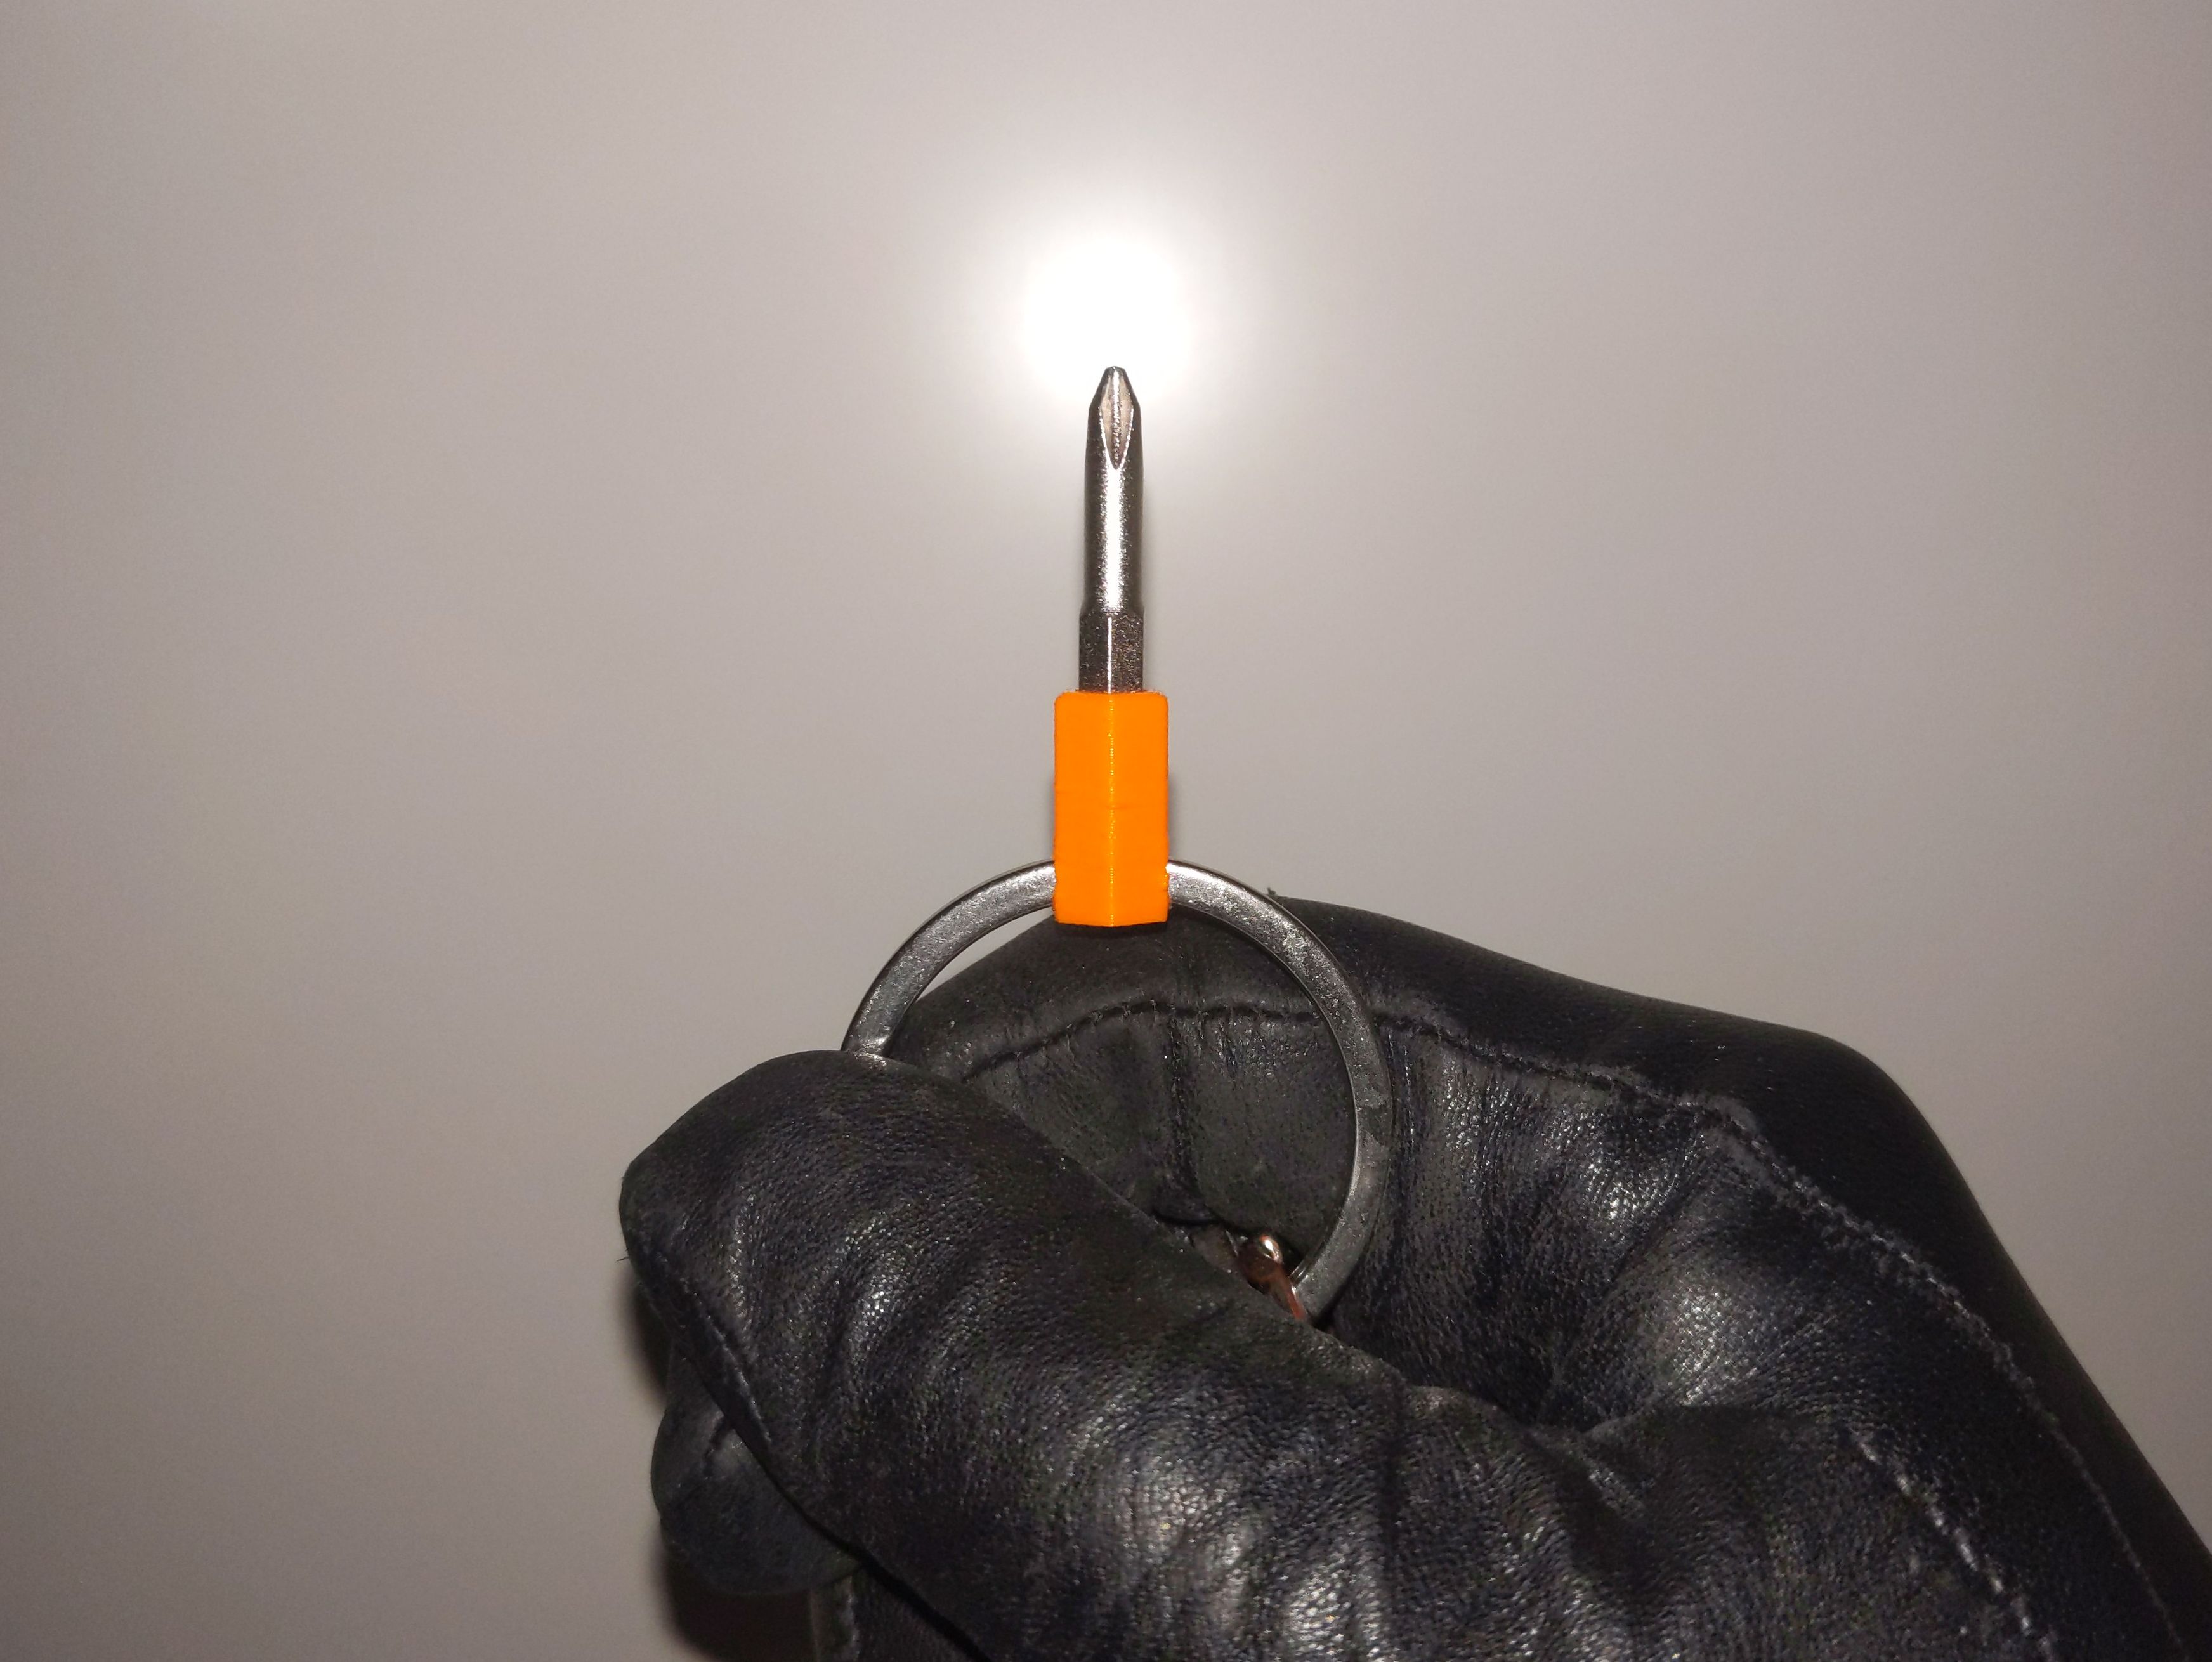 Super tiny key ring screwdriver by FuzzyRaptor